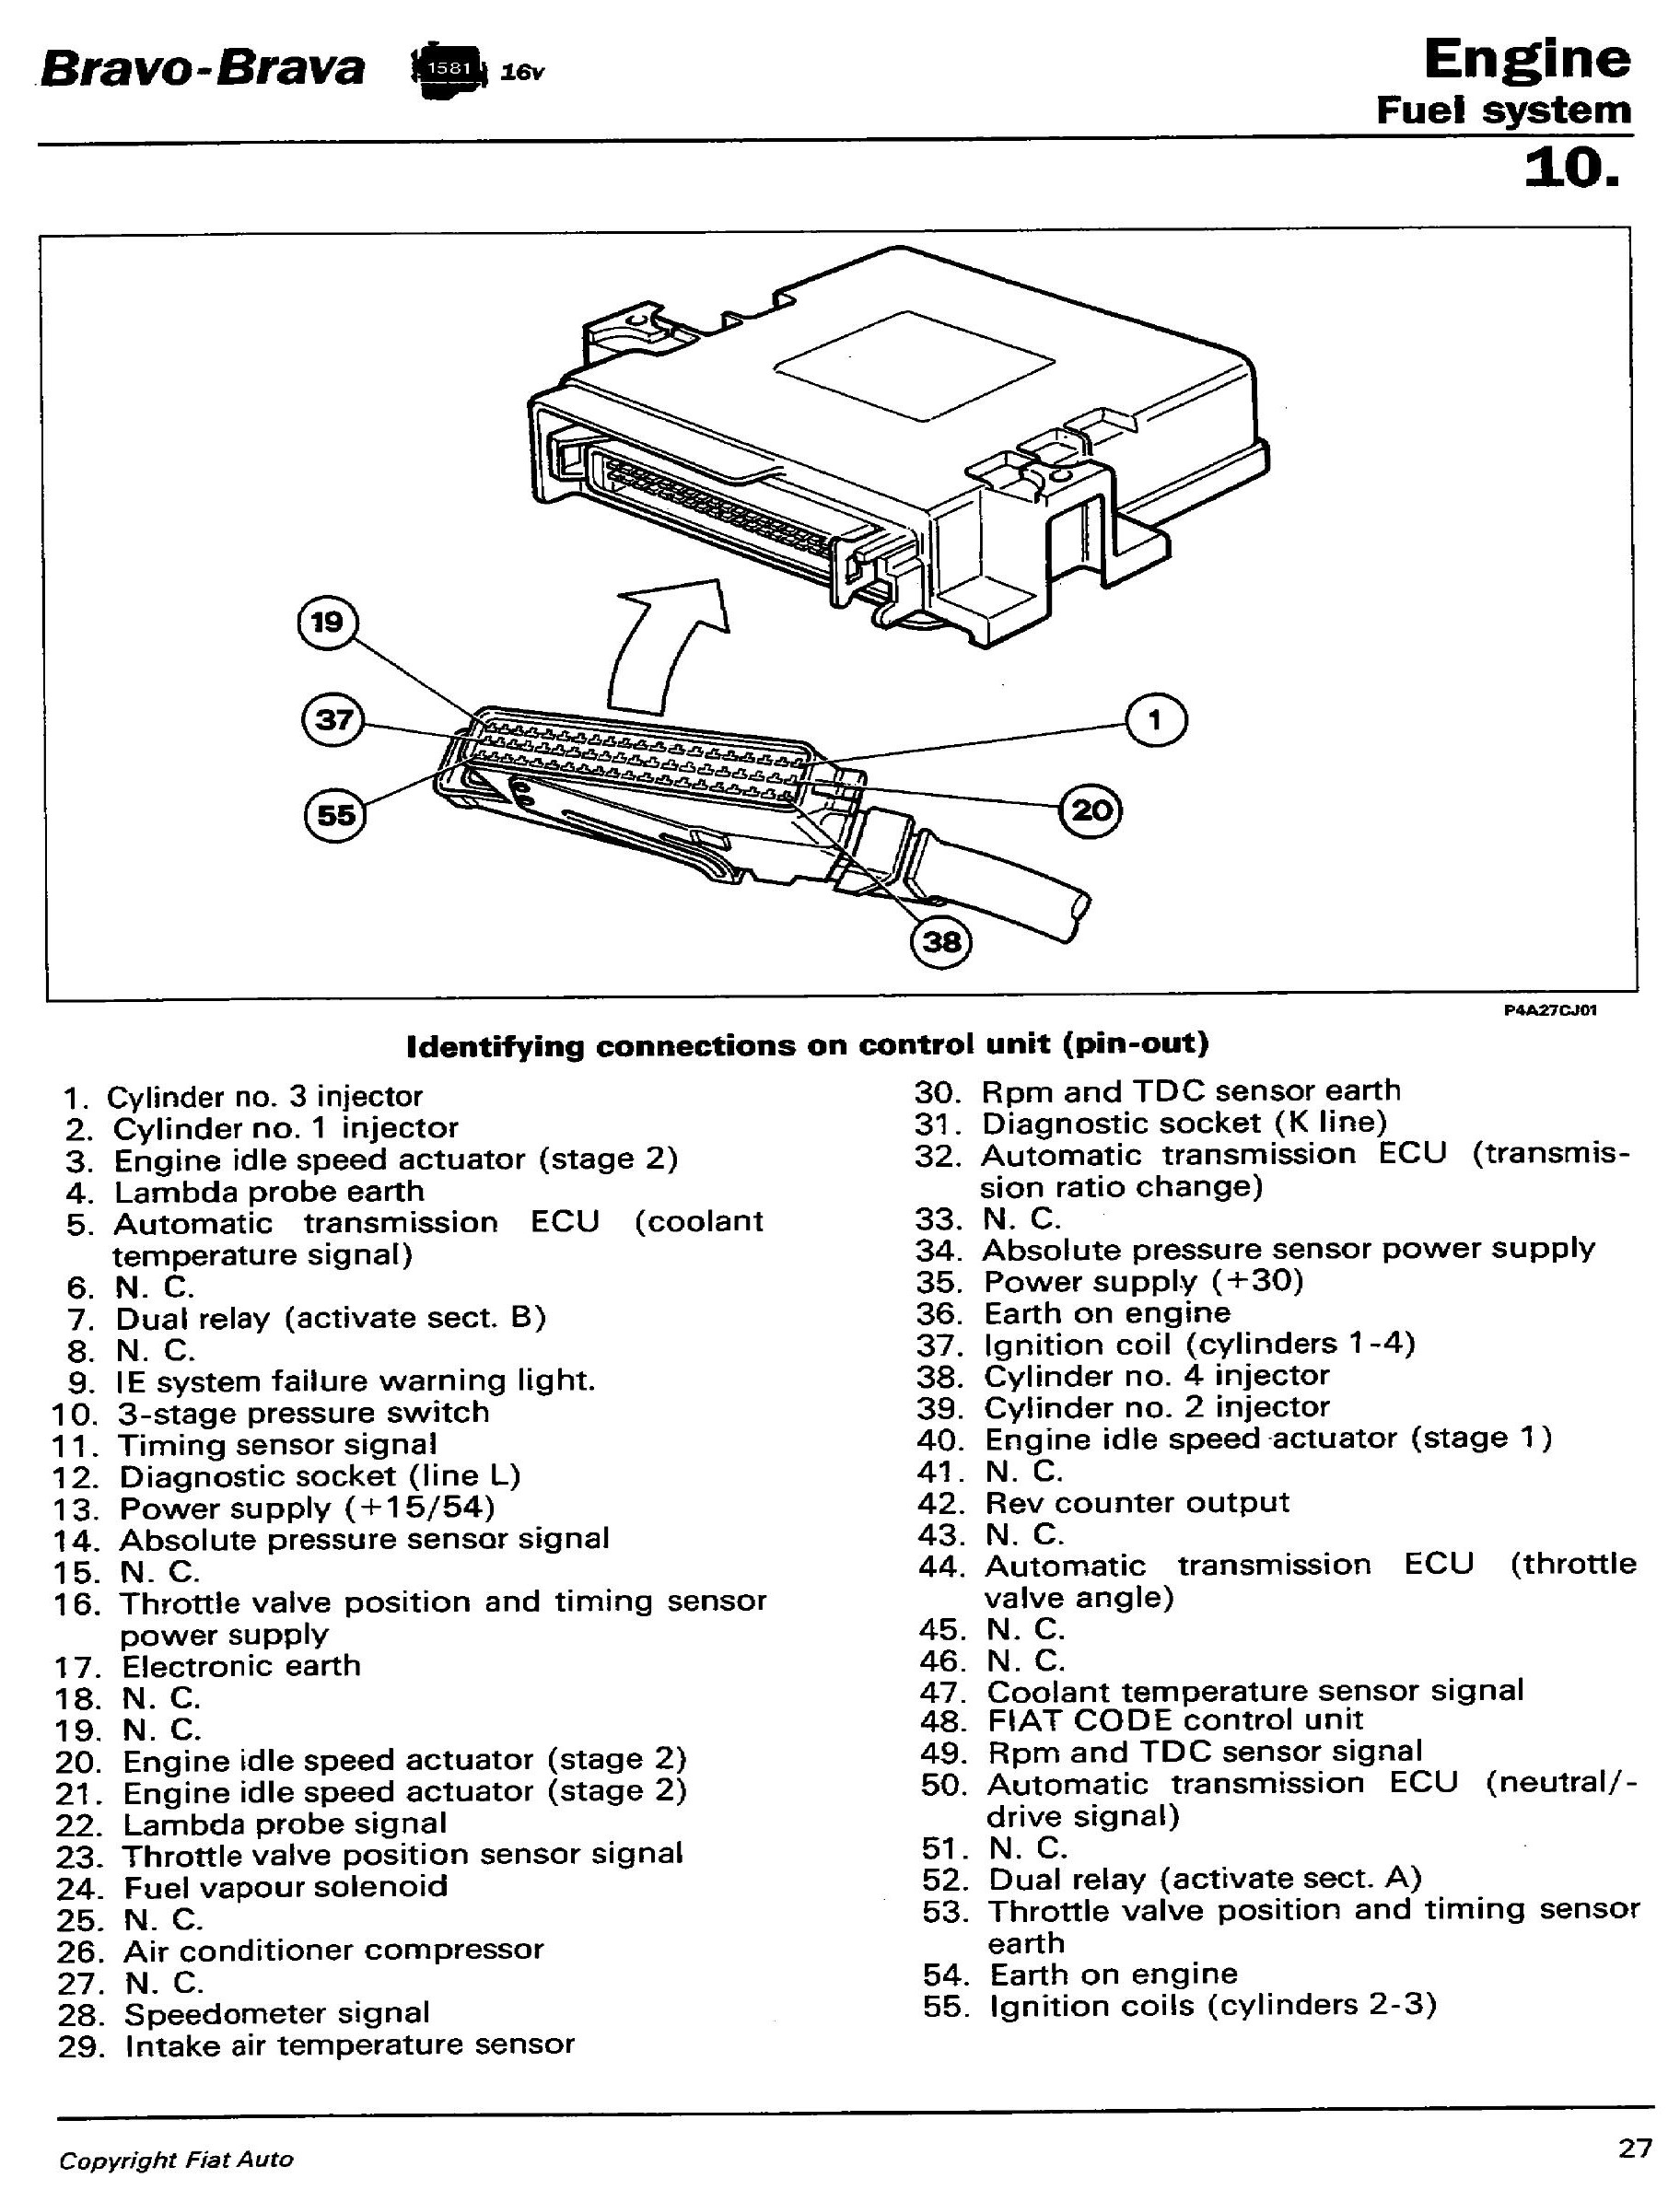 Wiring Diagram Fiat Strada 2013 - wiring diagram zafira